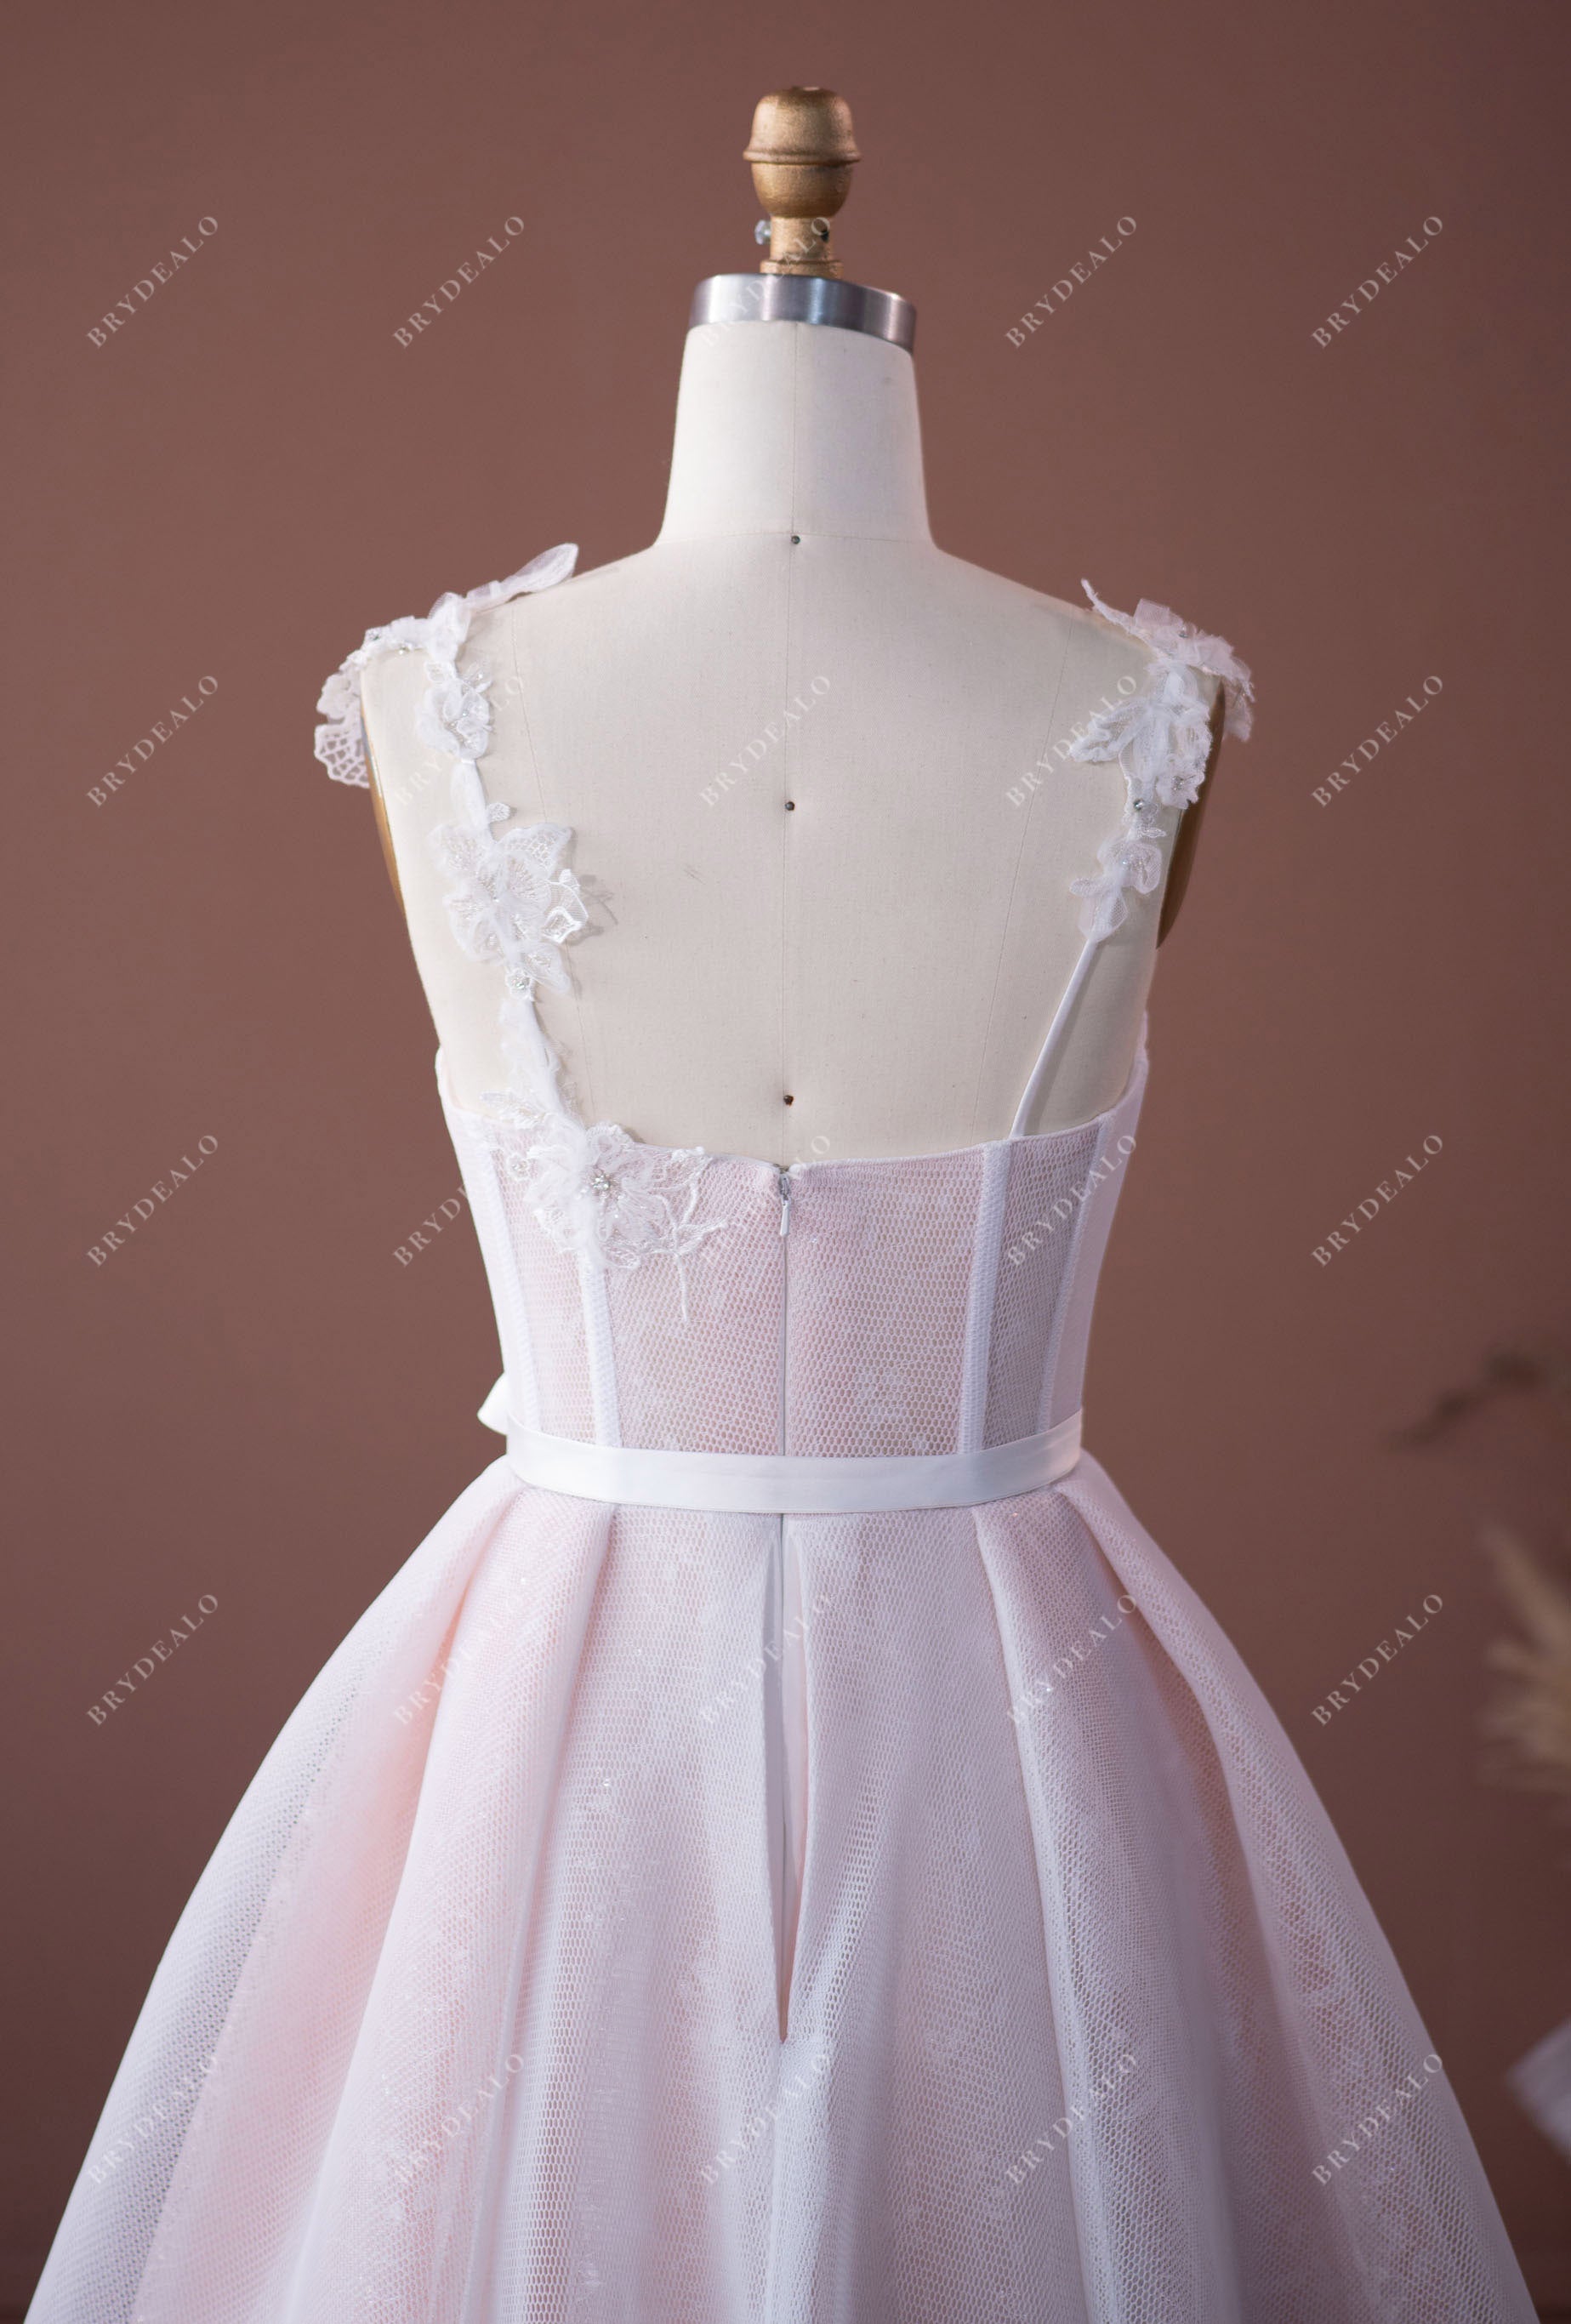 Popular Sweetheart Pinkish Corset Lace Mesh Wedding Dress